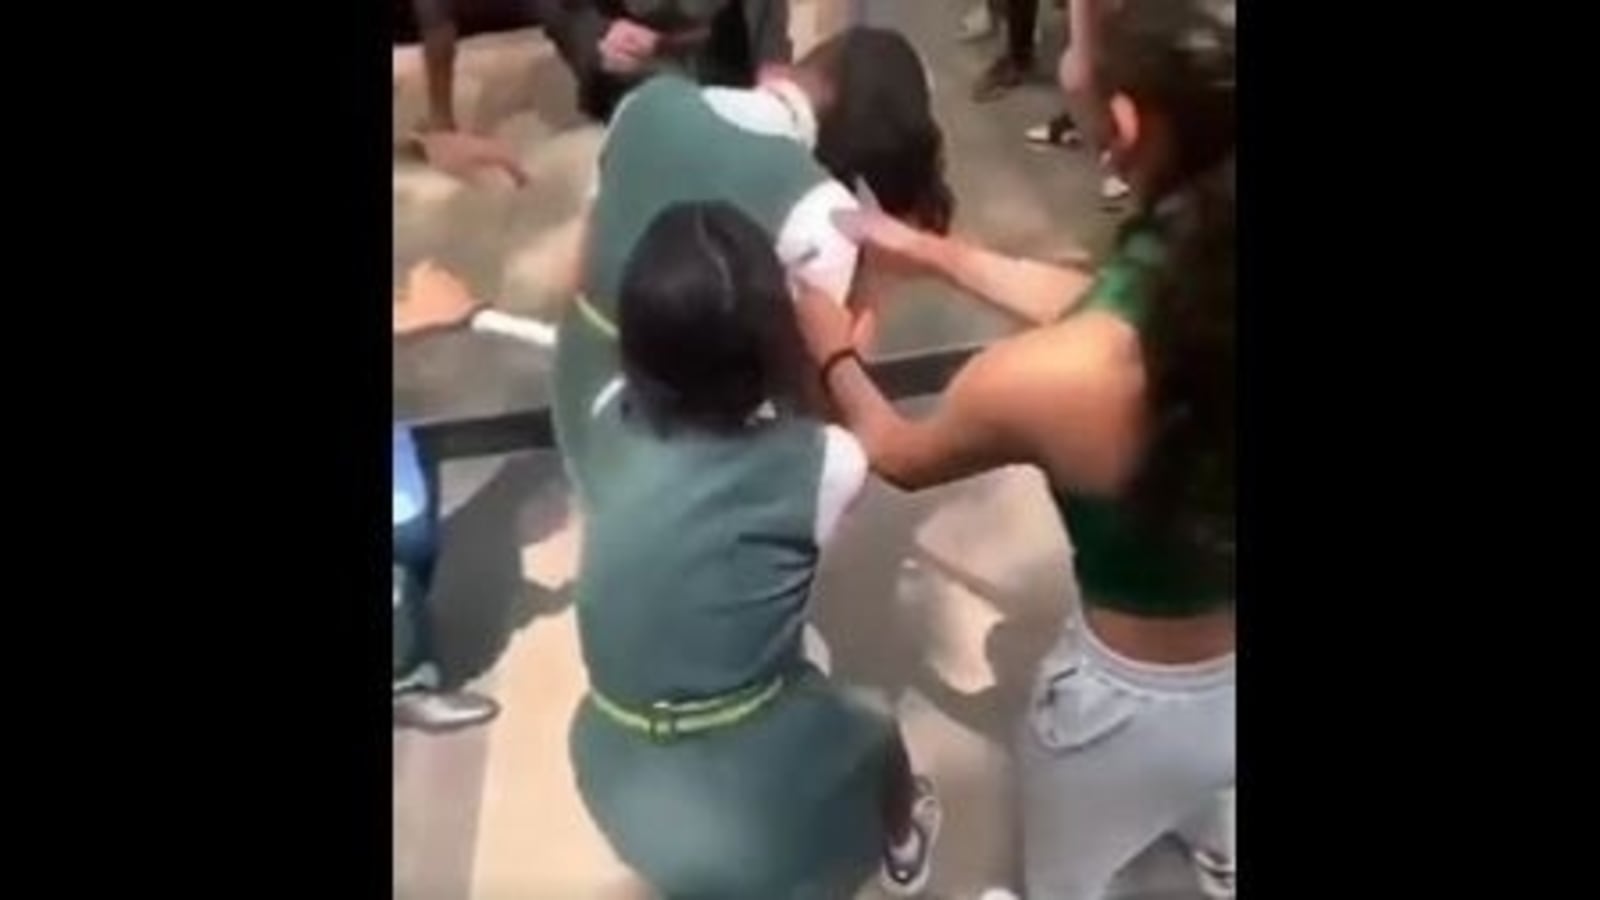 Teenage Girls Undressing - Video of Bengaluru girls fighting on street in school uniform emerges |  Latest News India - Hindustan Times